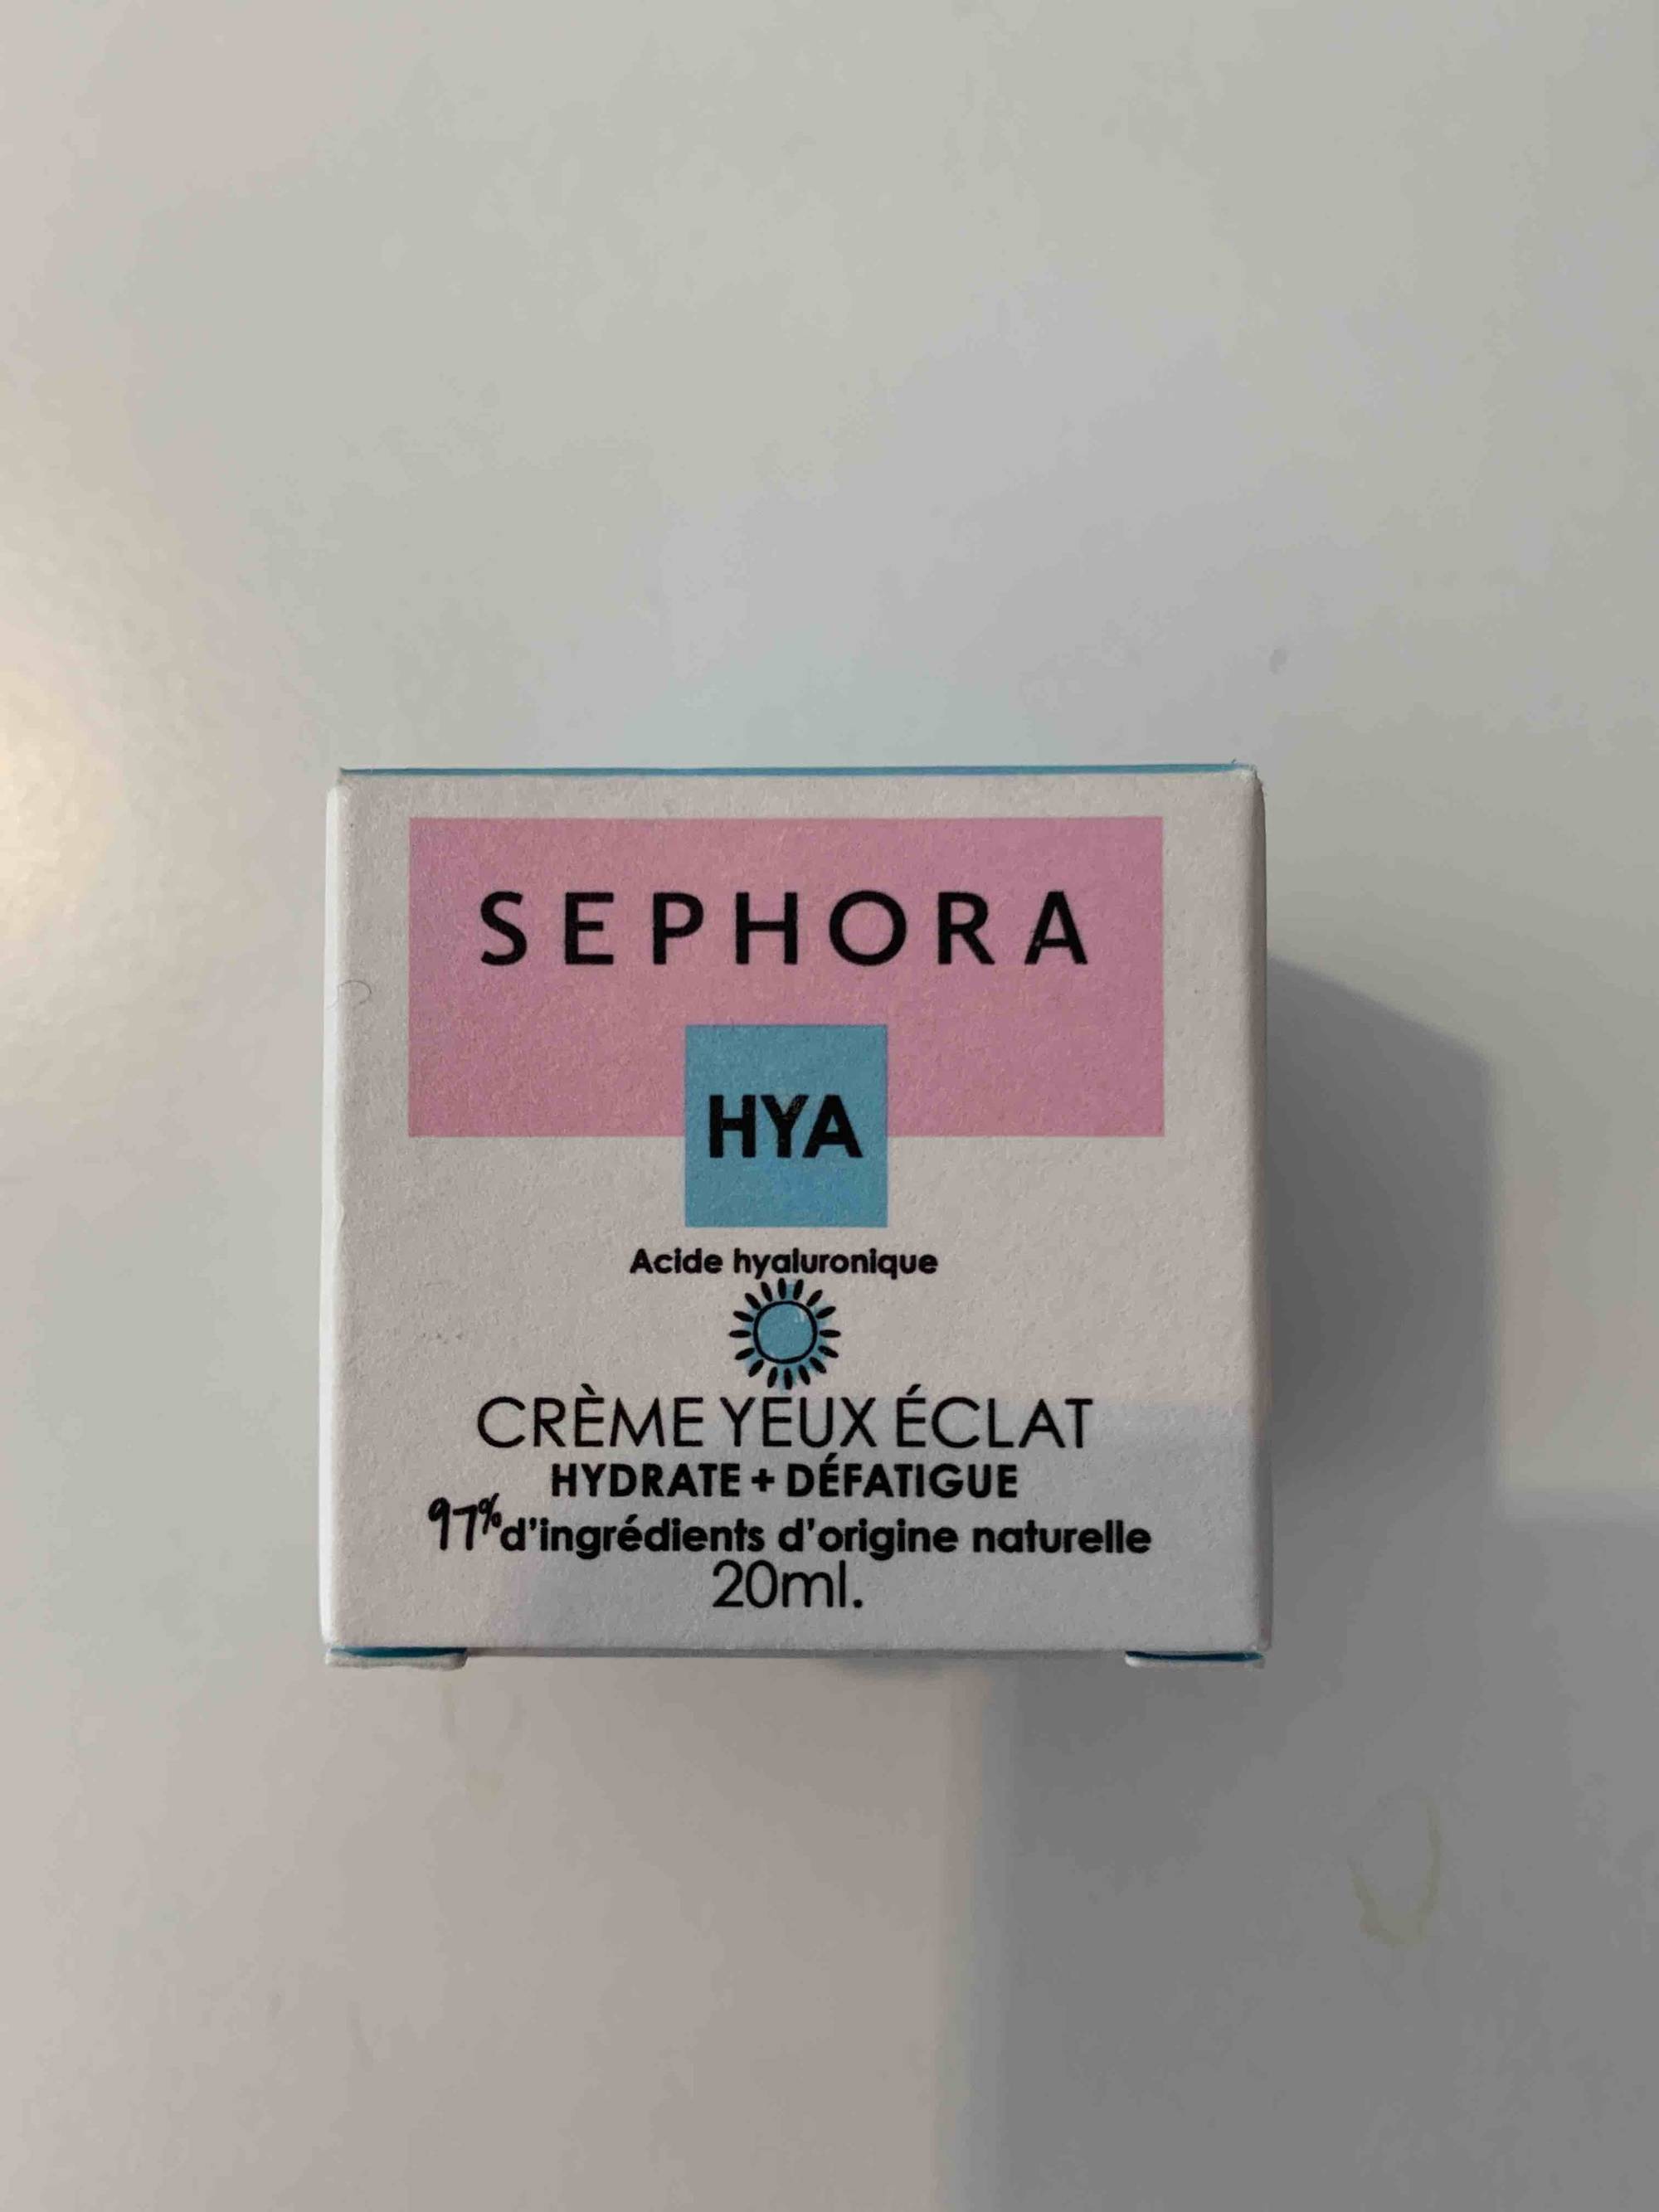 SEPHORA - Hya - Crème yeux éclat 